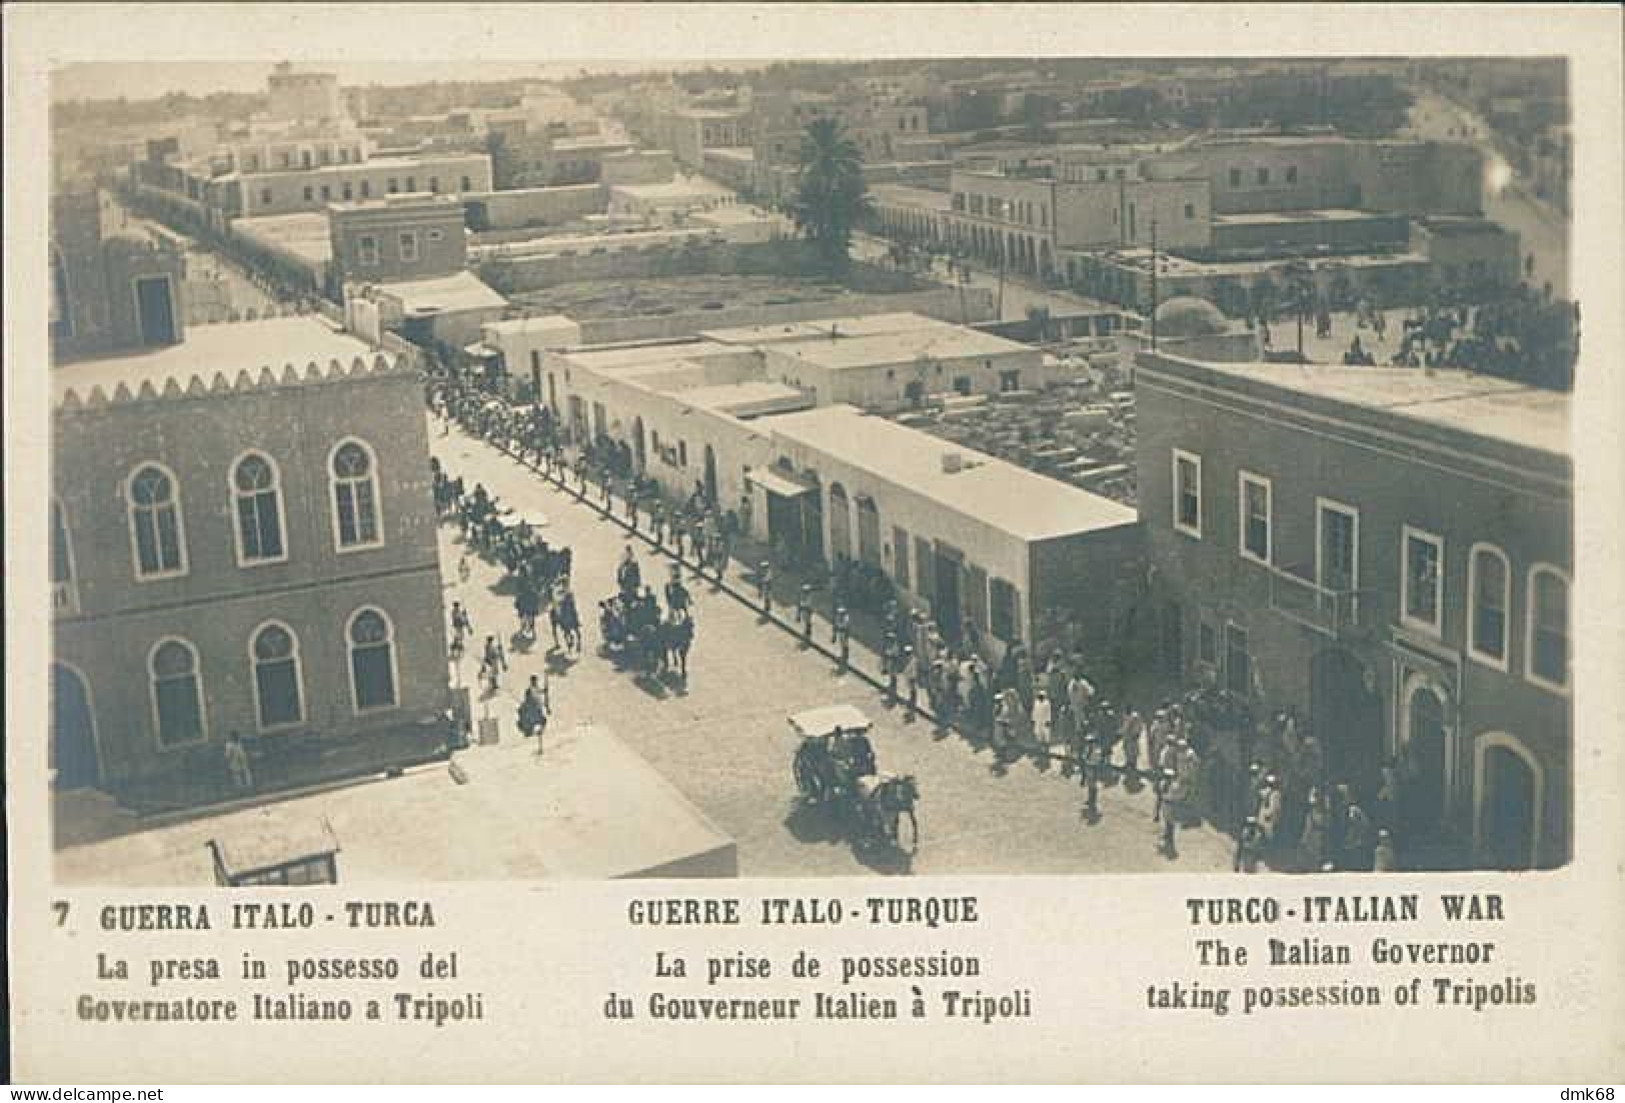 LIBYA / LIBIA - TURKEY / ITALY WAR - ITALIAN GOVERNOR TAKING POSSESSION OF TRIPOLI - RPPC POSTCARD 1910s (12595) - Libya